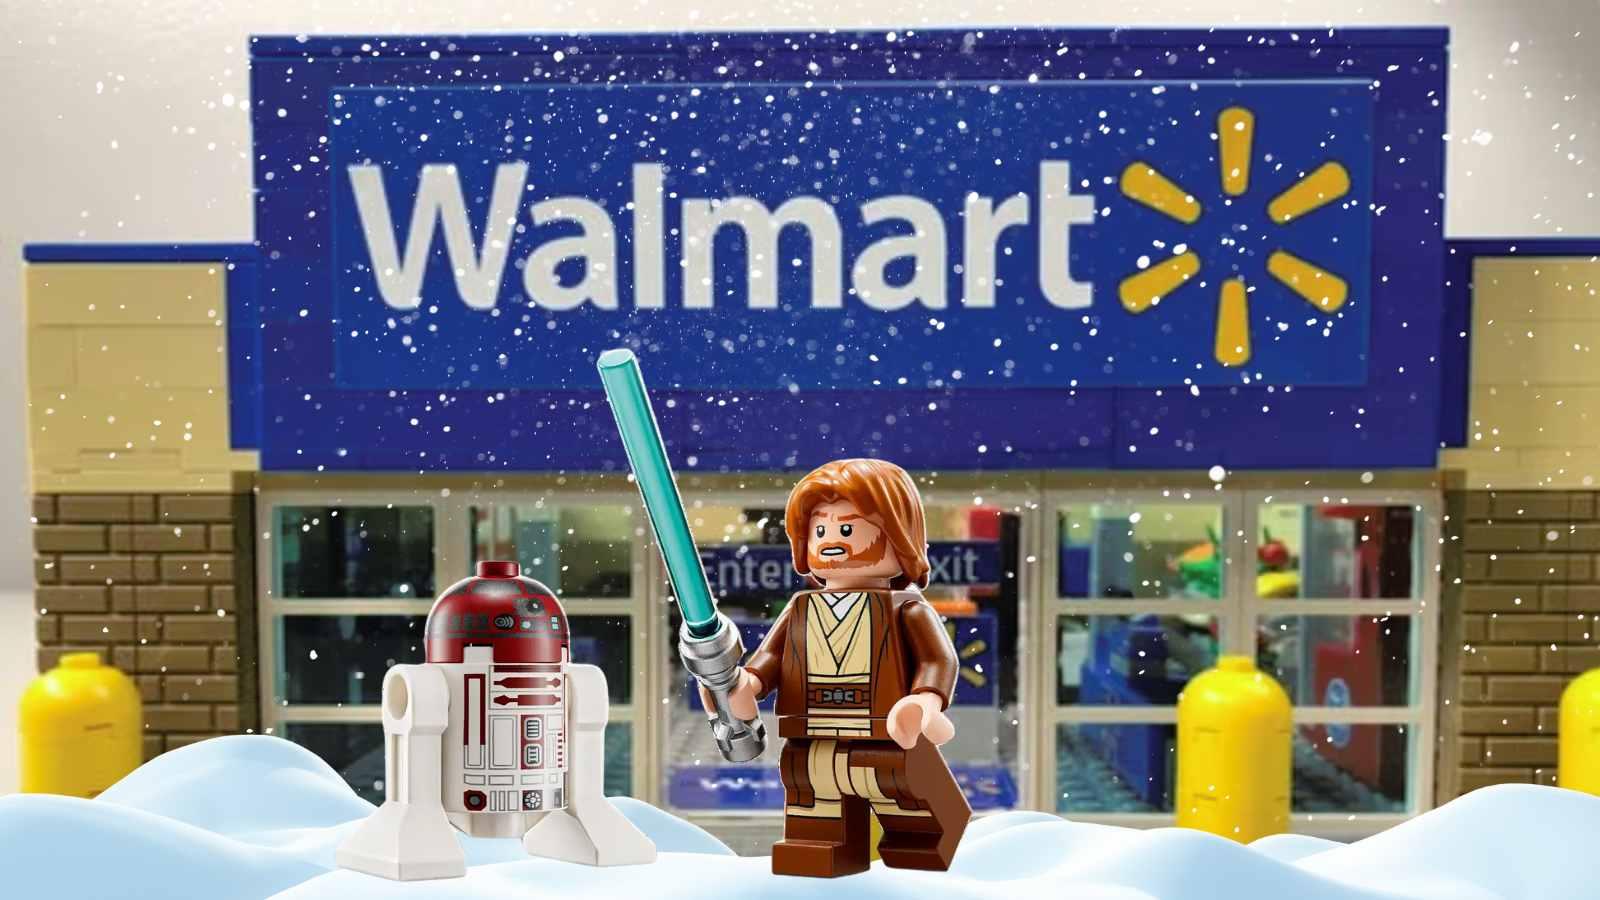 LEGO Star Wars Obi-Wan Kenobi and droid figure in front of Walmart entrance